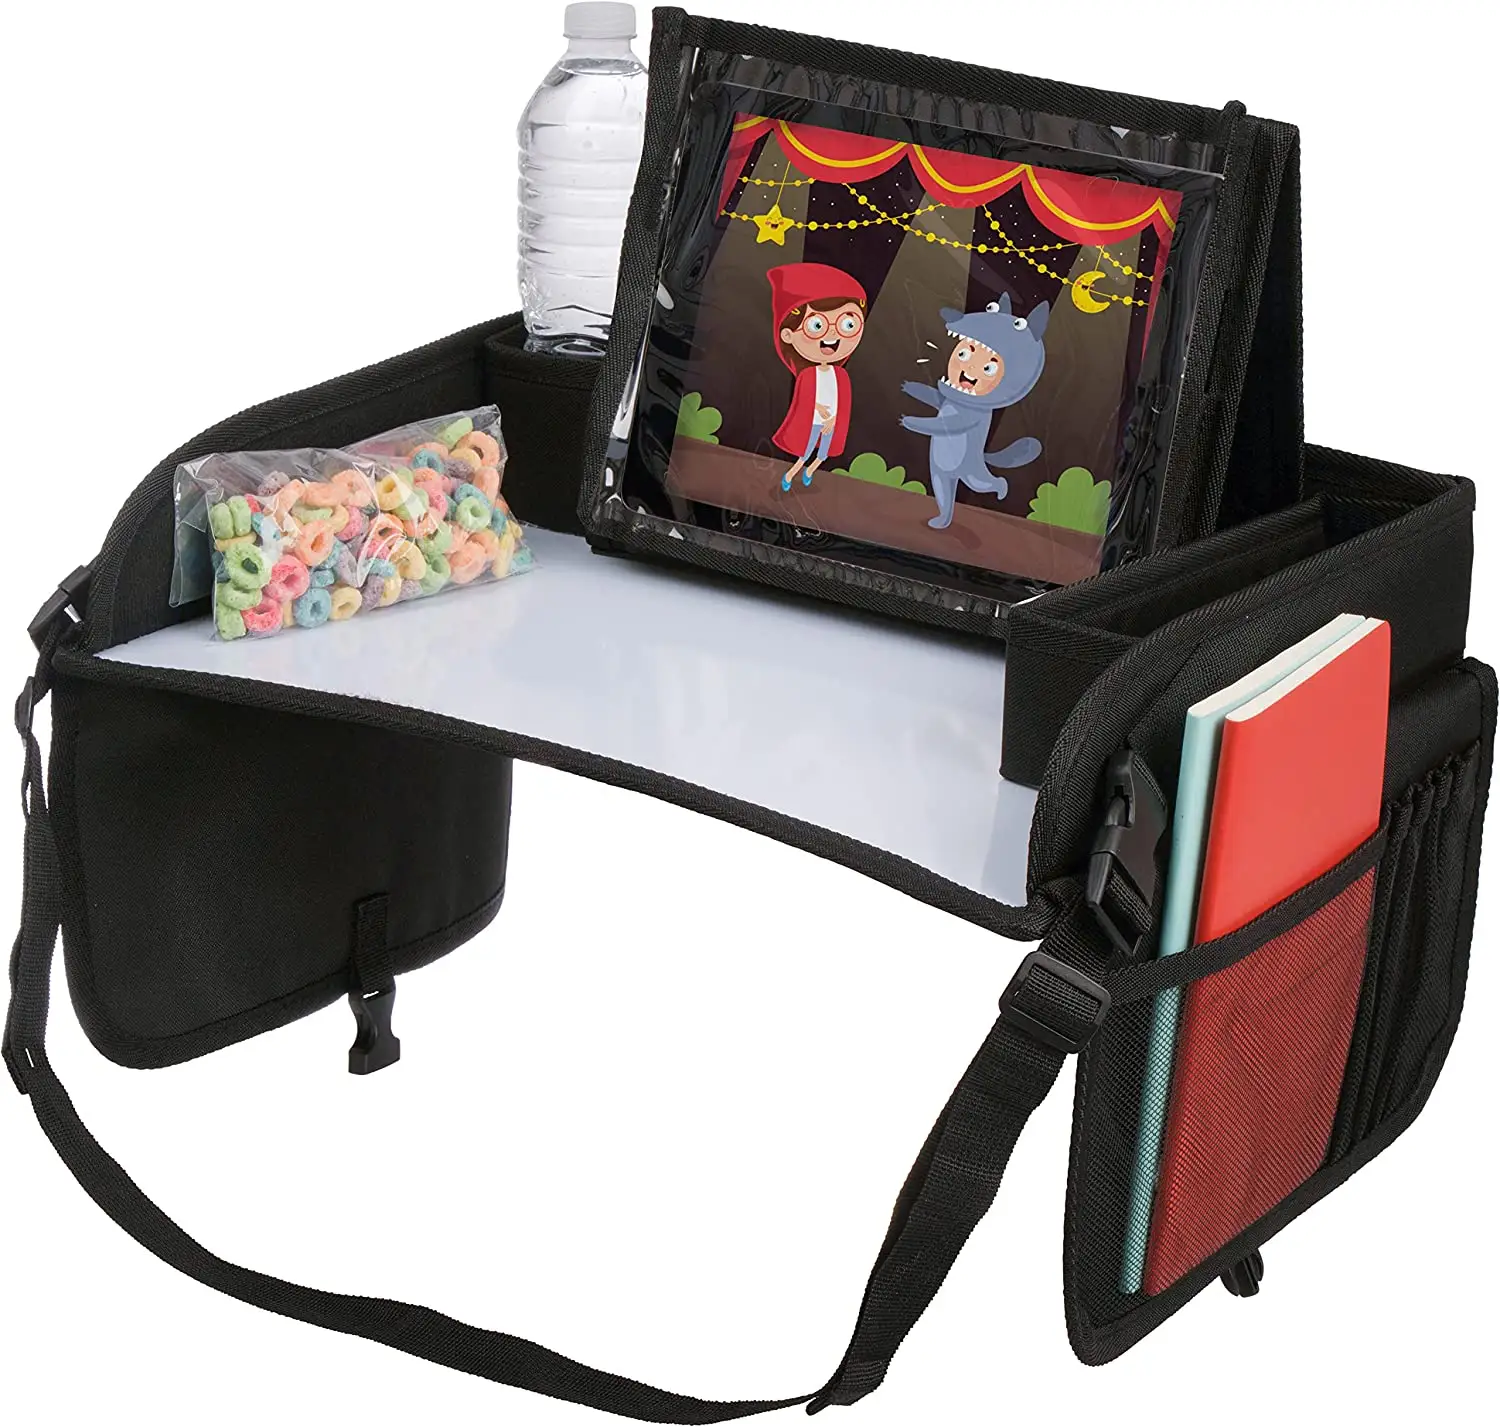 Dudukan Tablet Dapat Dilepas Baki Perjalanan Anak-anak dengan Papan Hapus Kering untuk Pesawat dan Kursi Booster